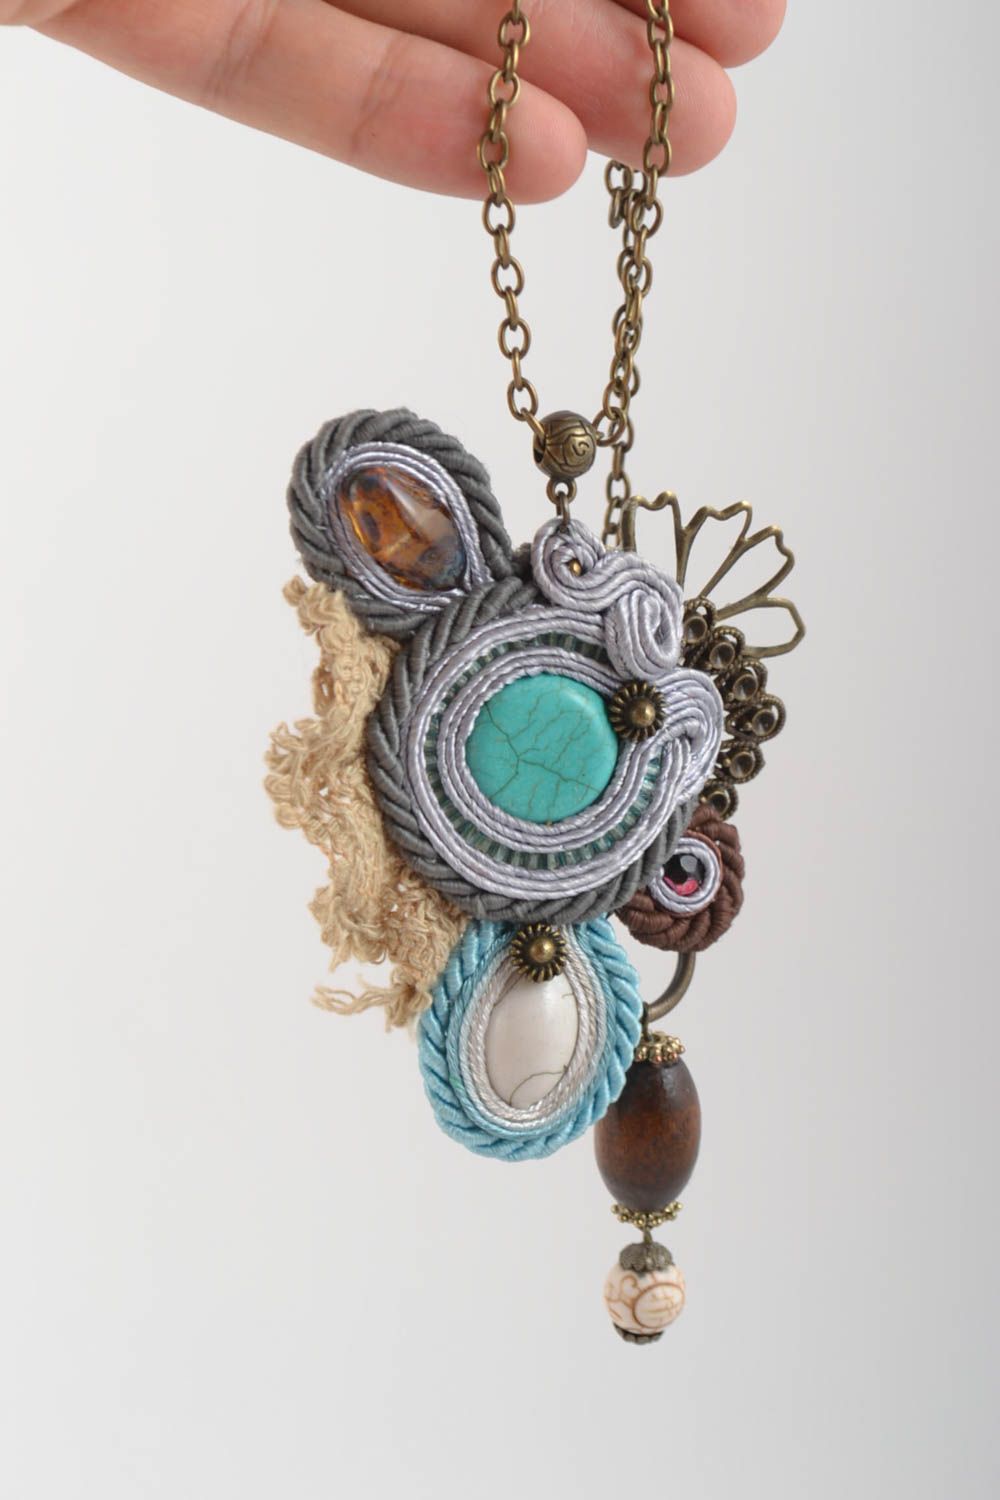 Handmade pendant soutache pendant designer pendant unusual gift for women photo 6